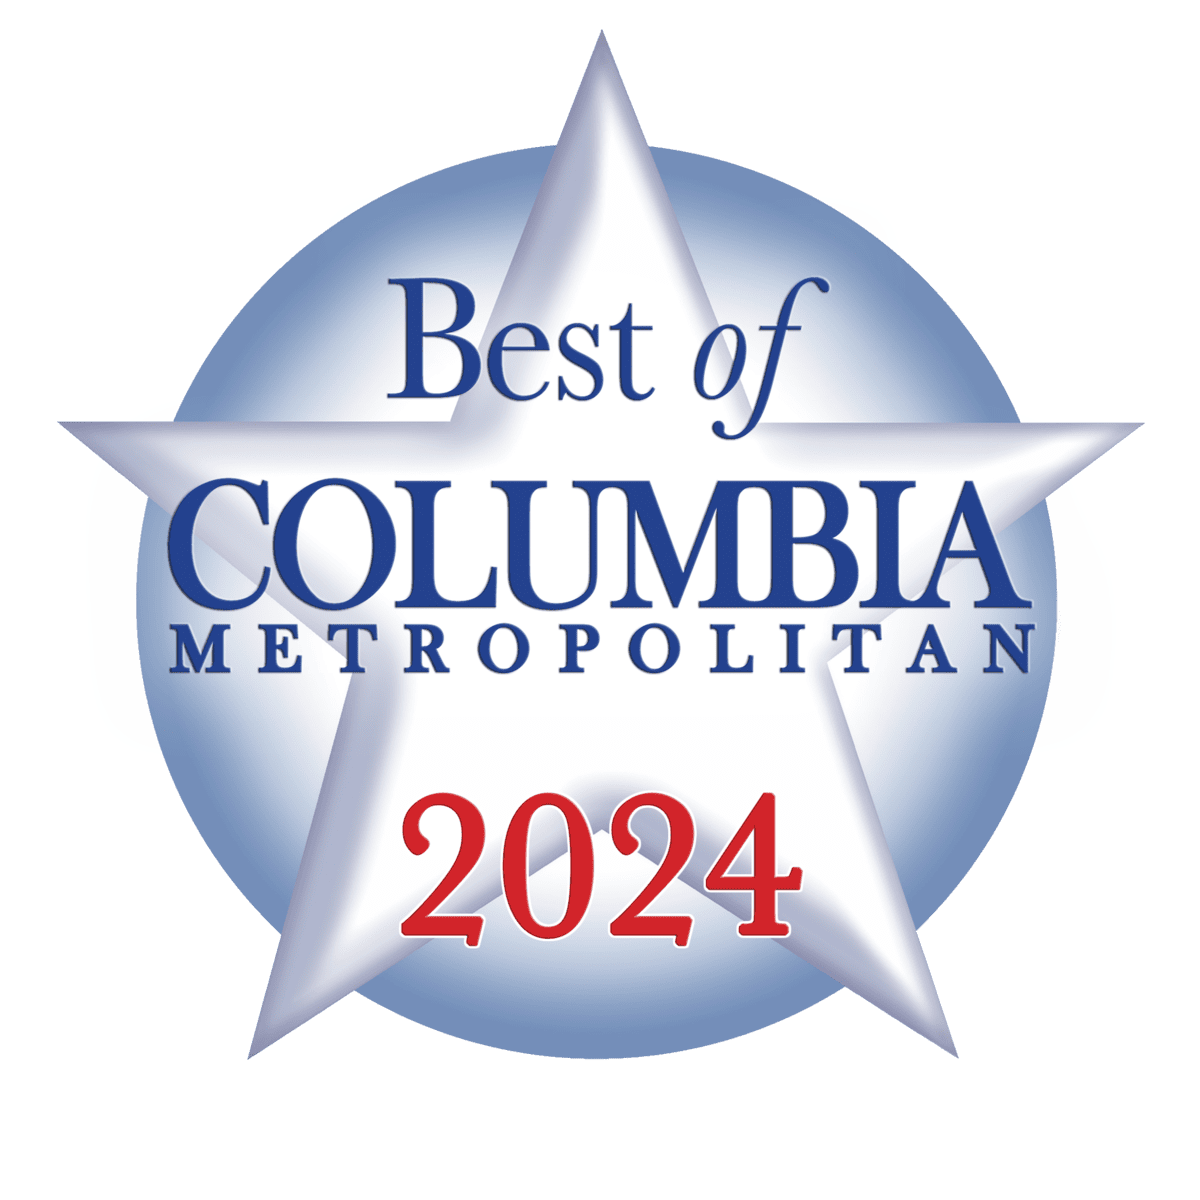 Best of Columbia Metropolitan 2024 Award